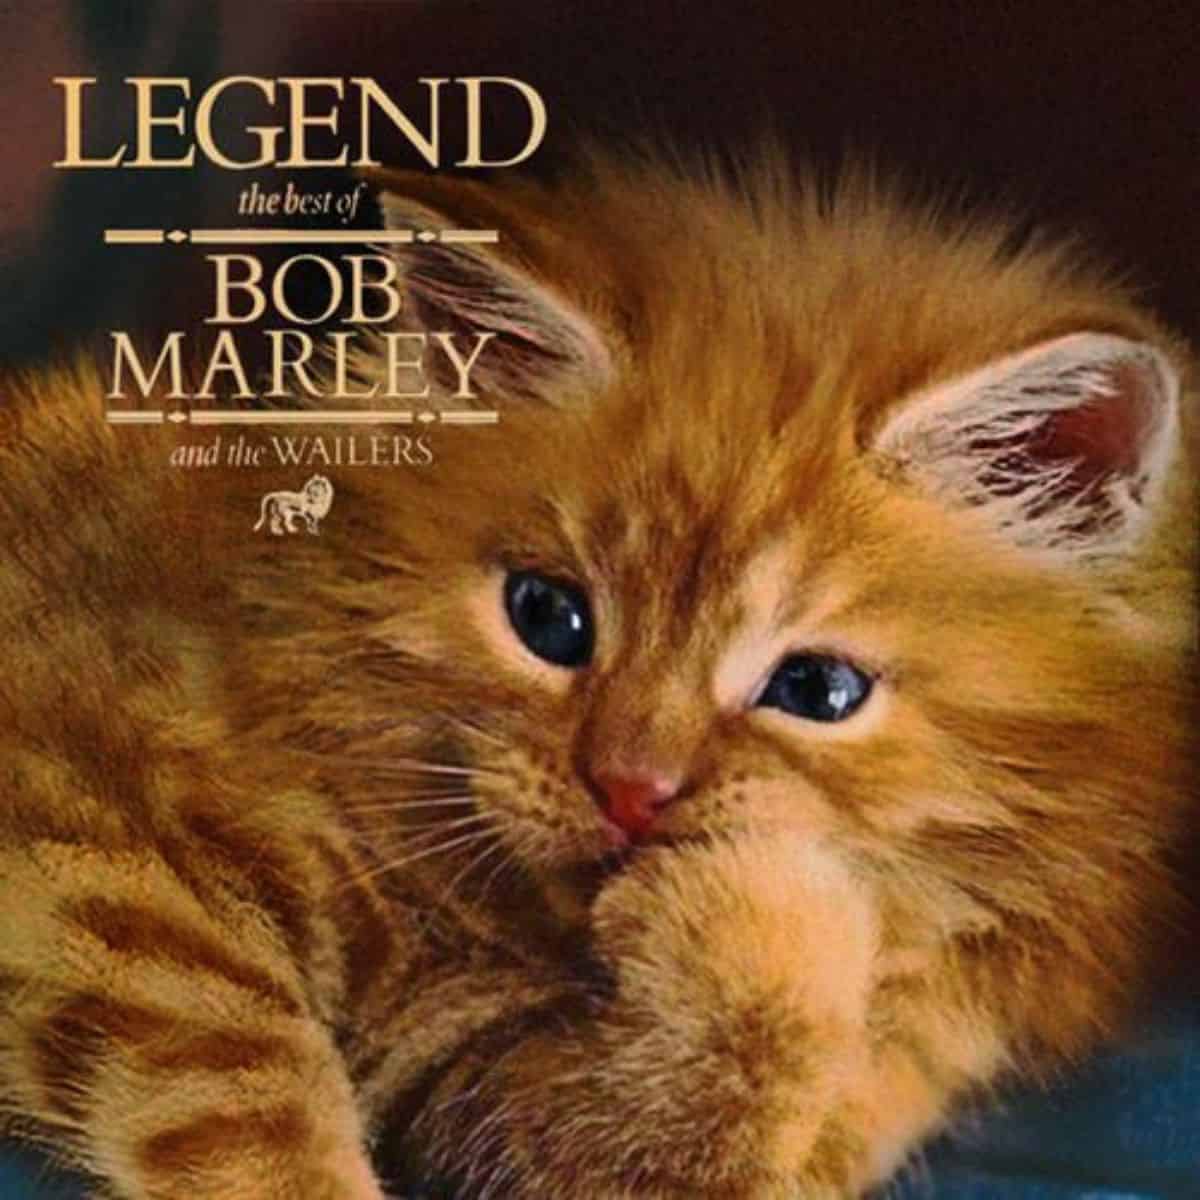 cat version of bob marley's album cover